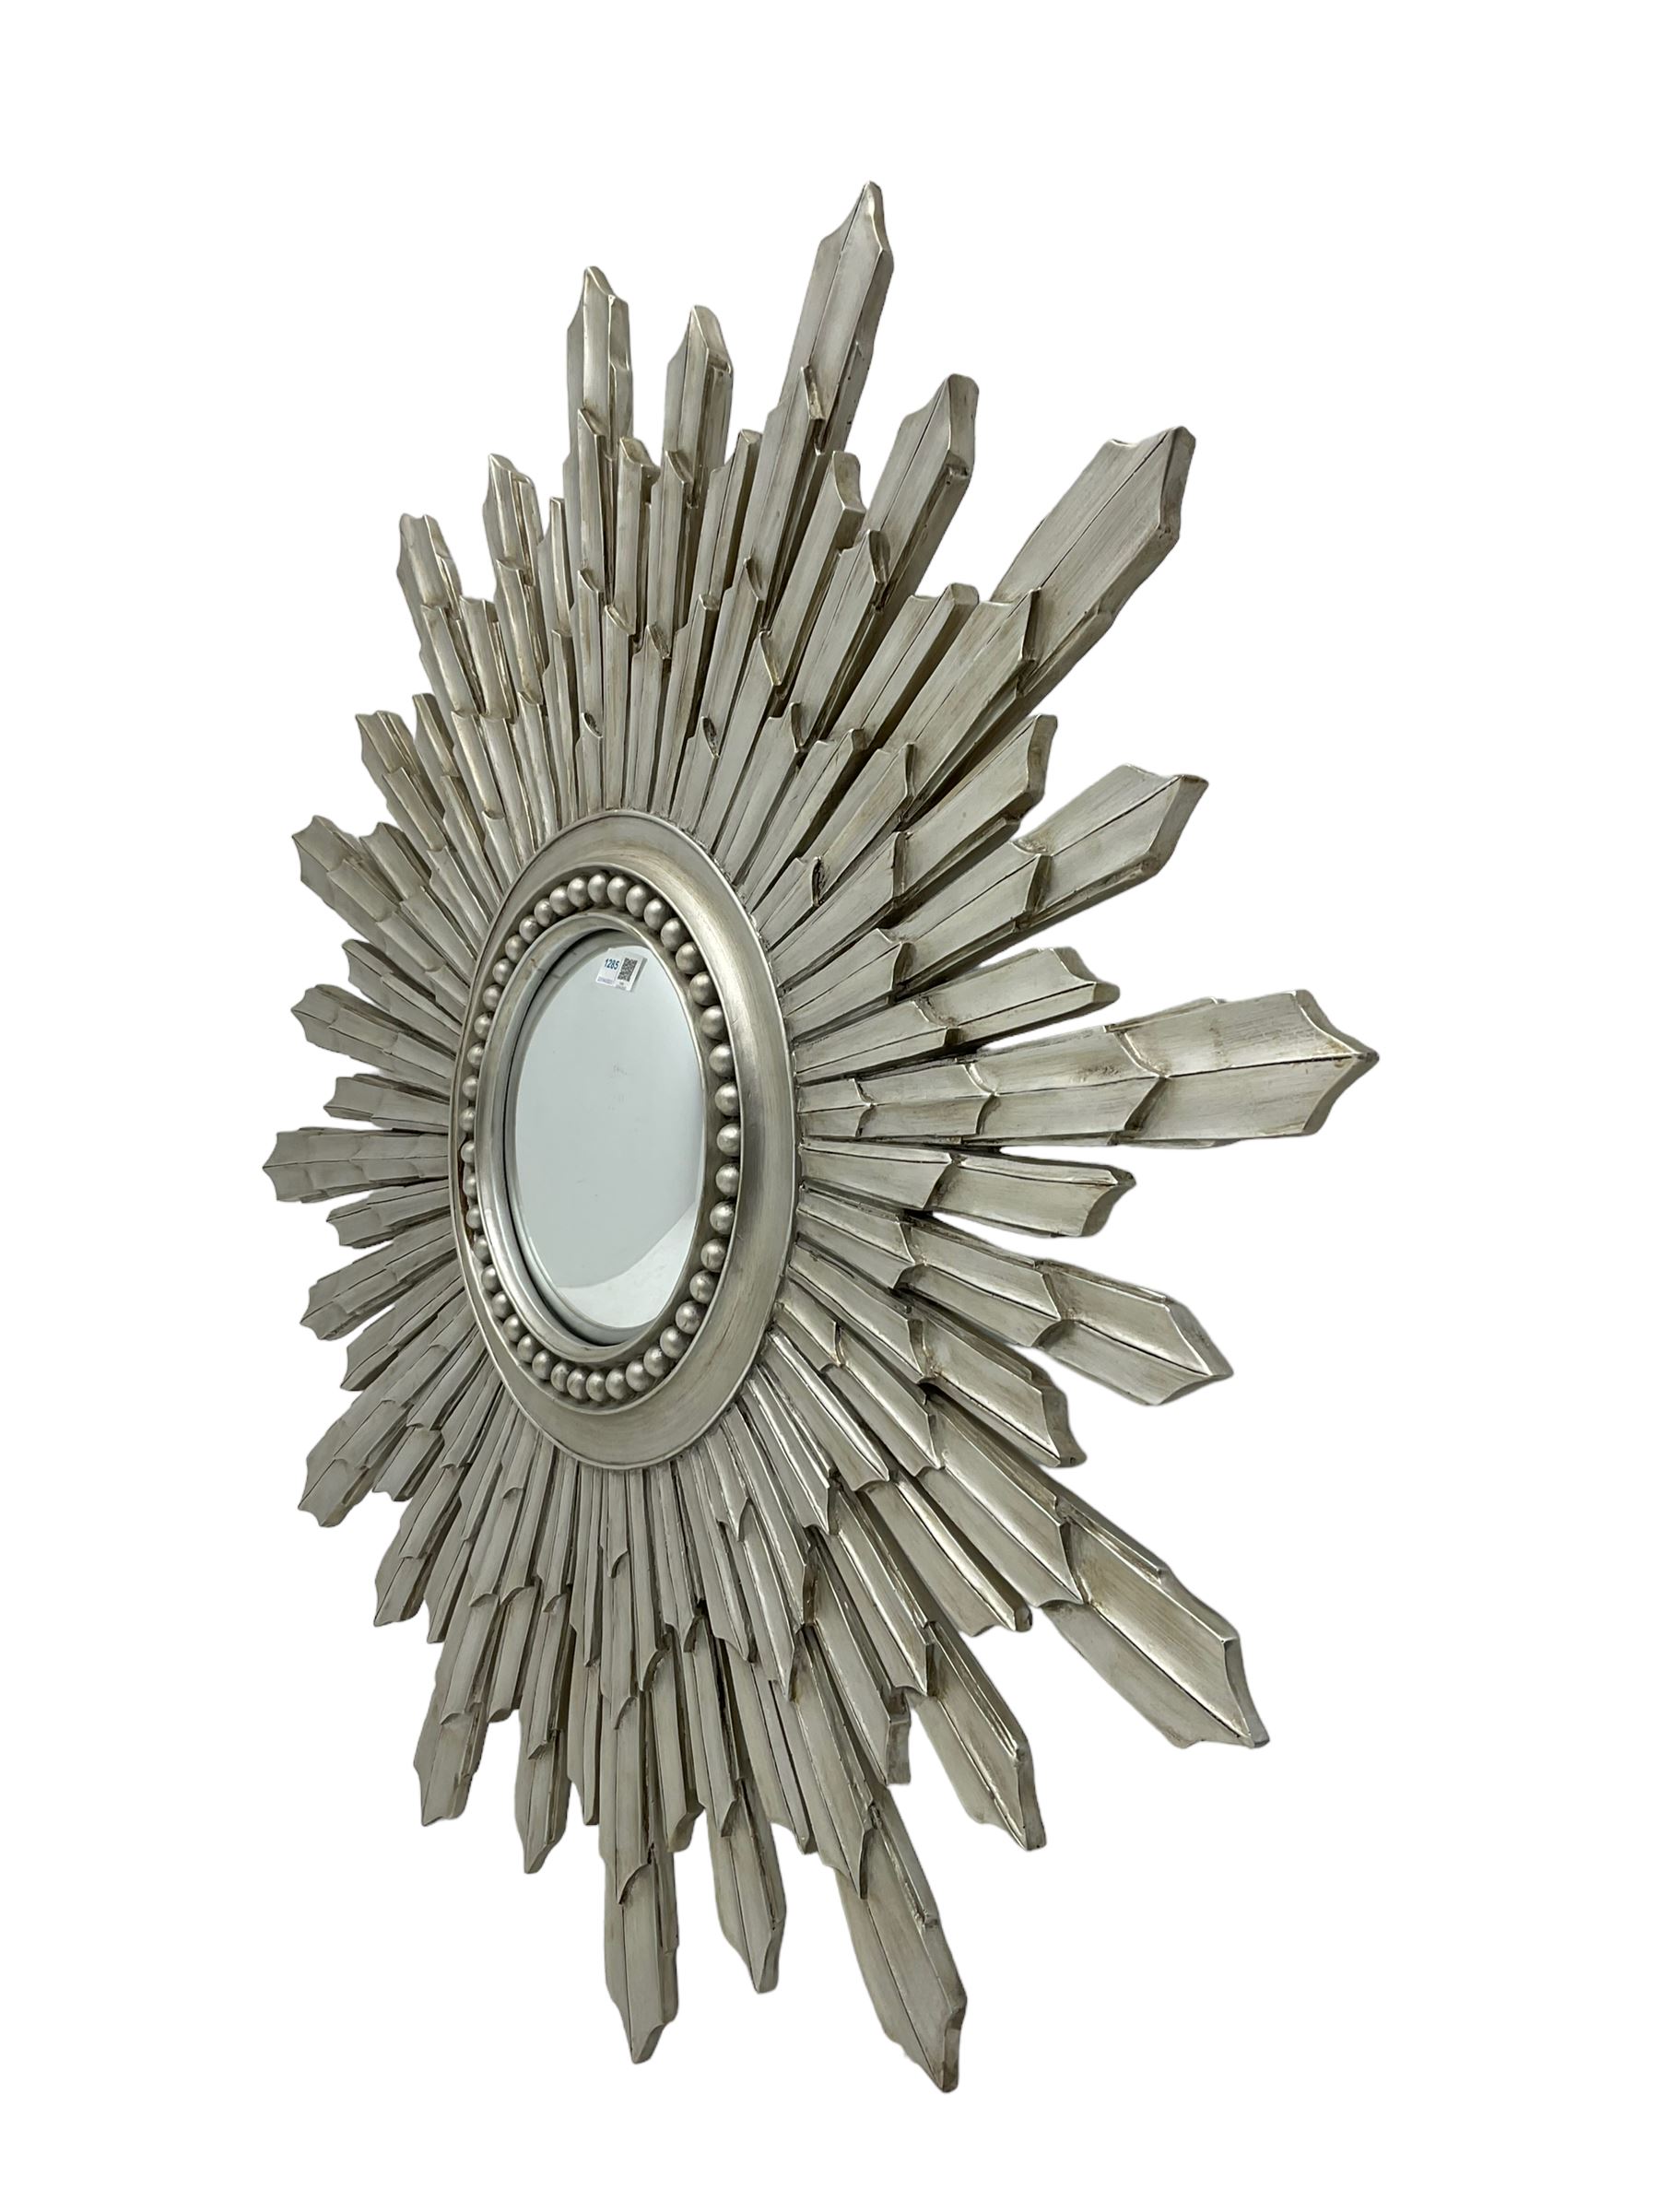 Laura Ashley - sunburst design mirror - Image 2 of 3